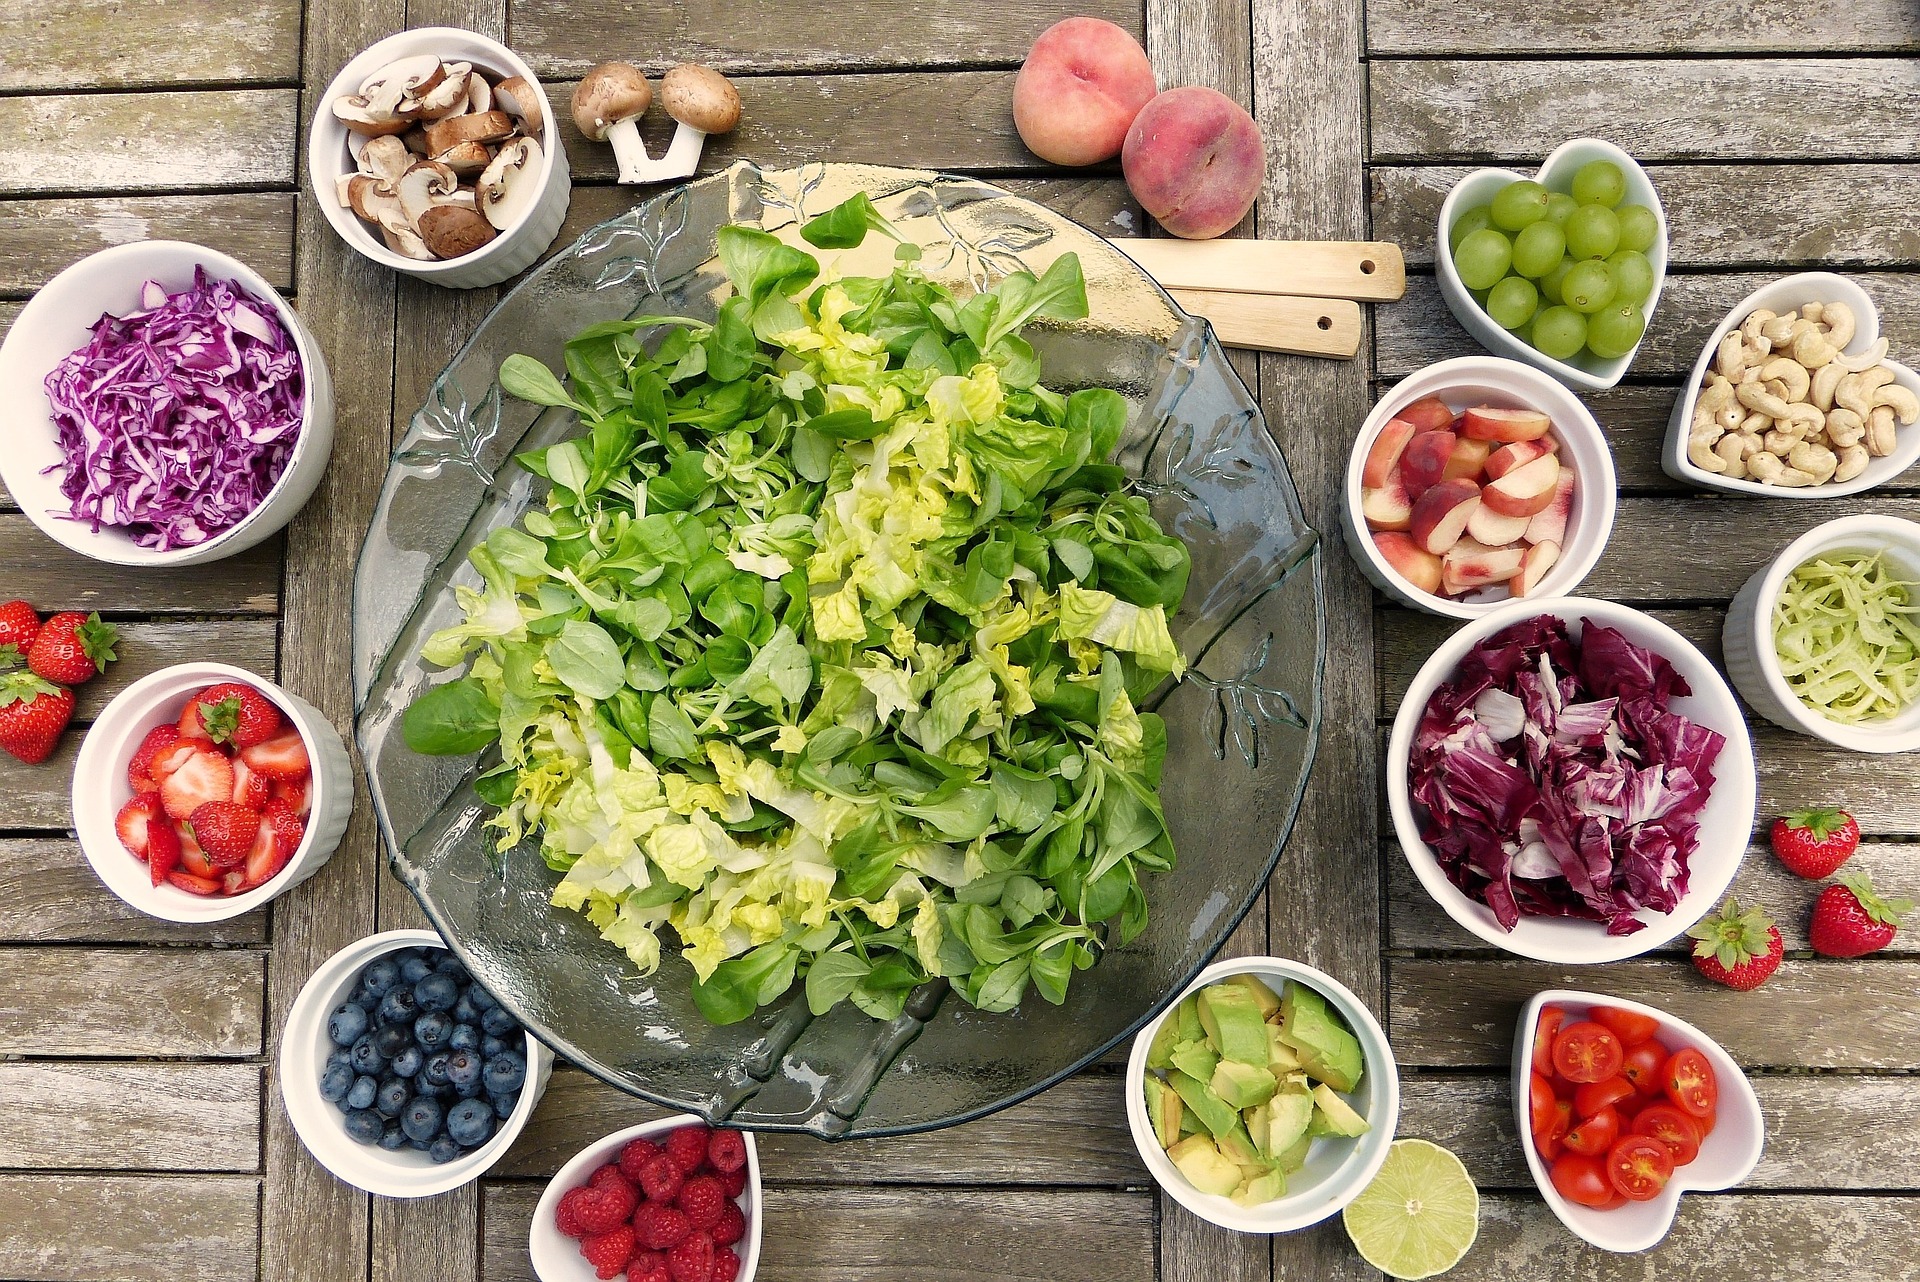 Benefits of Salad